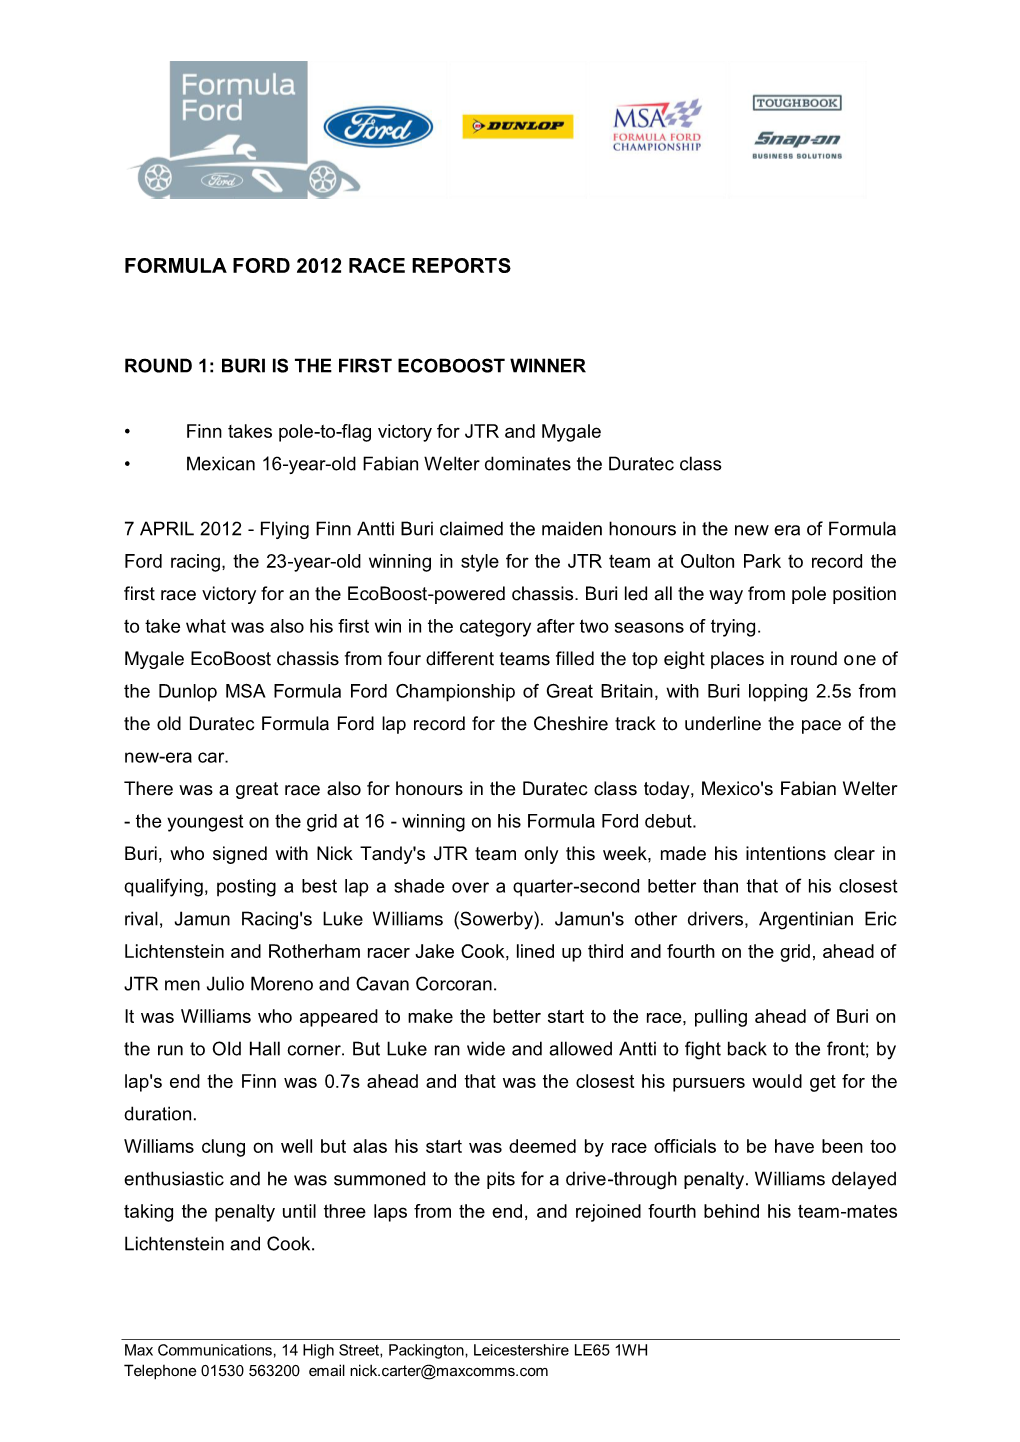 Formula Ford 2012 Race Reports